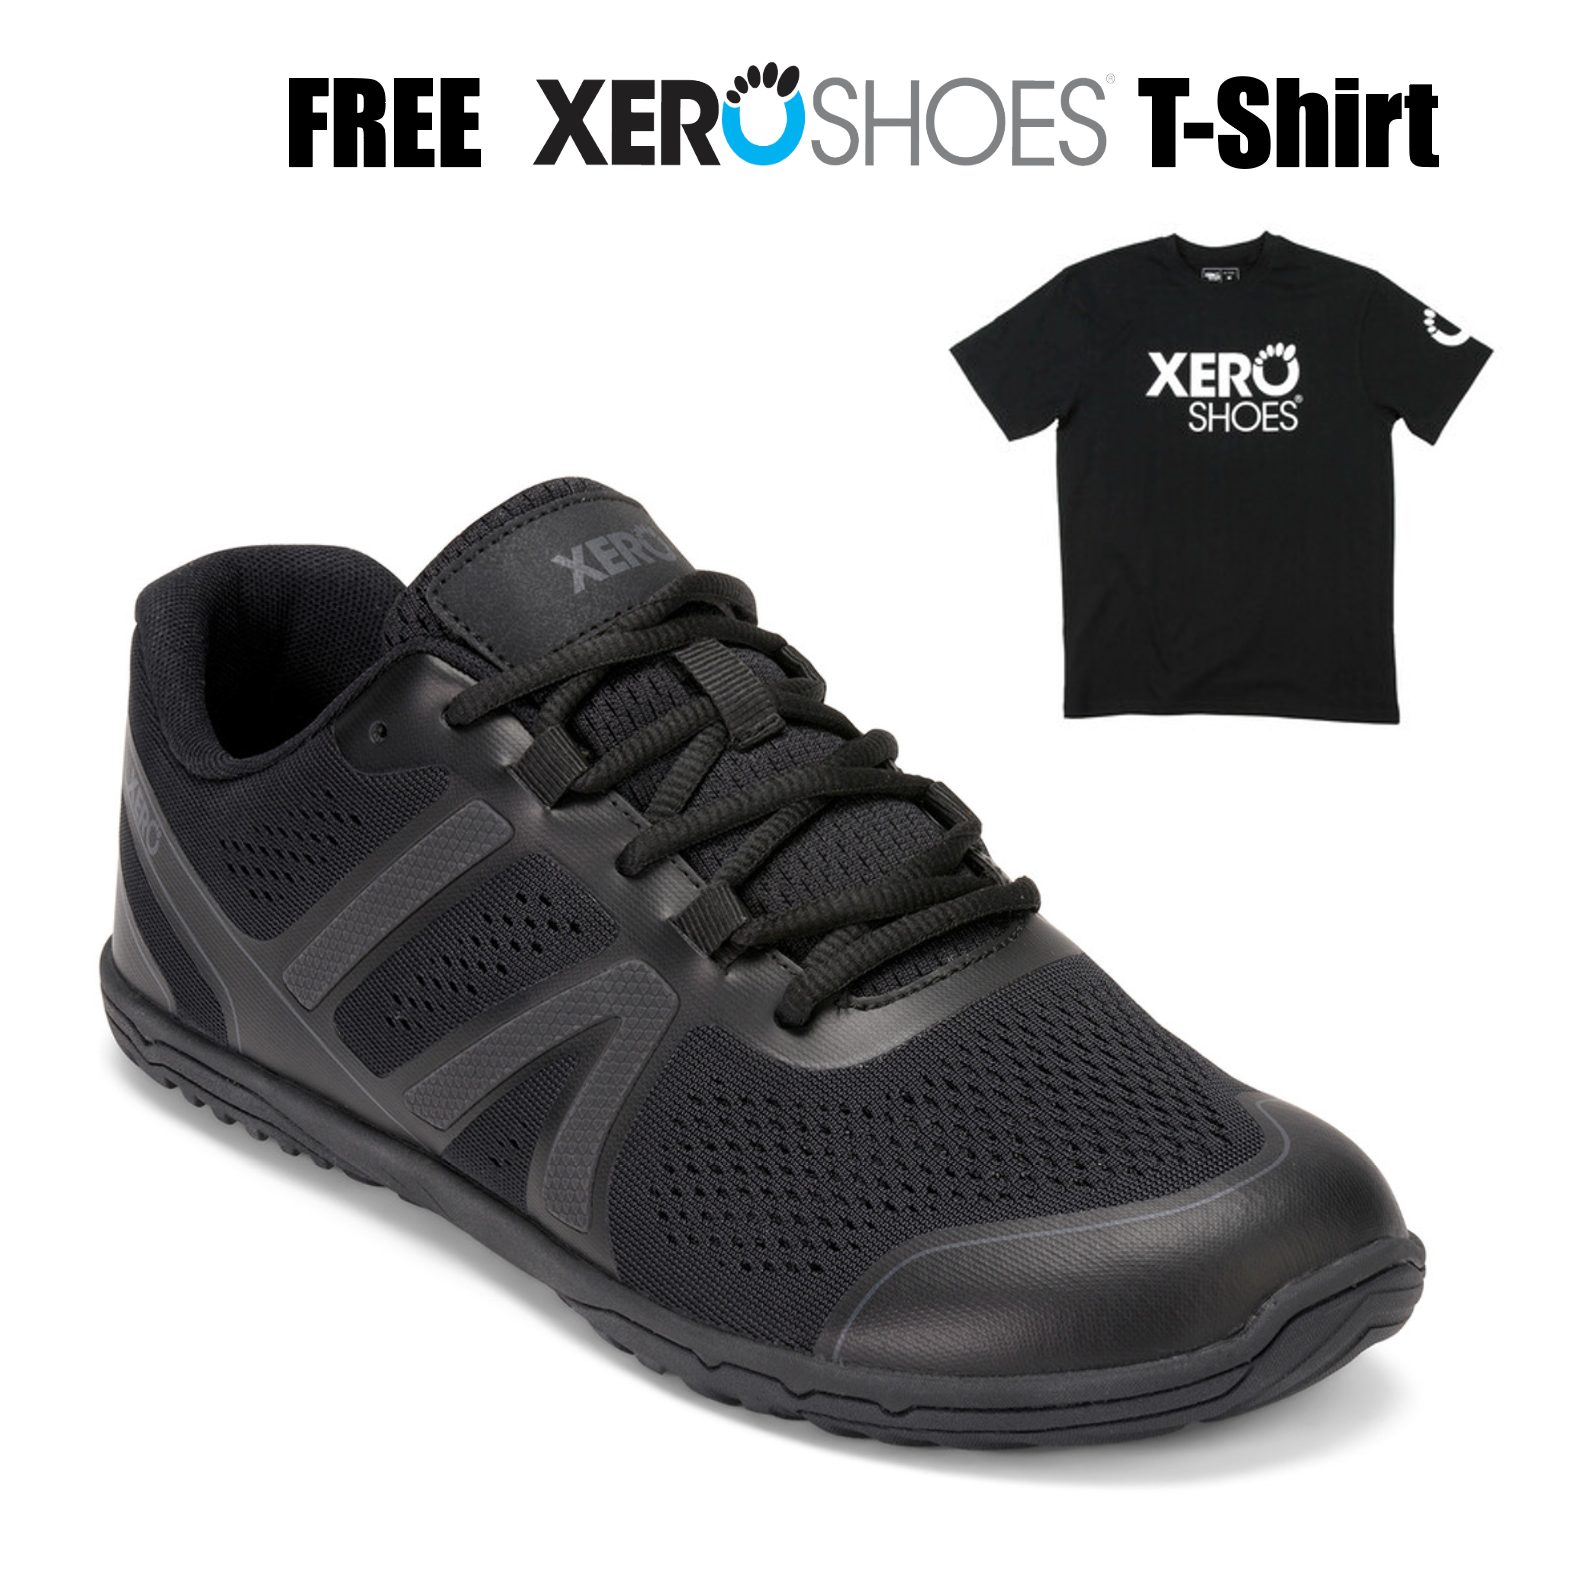 Xero HFS 2 Mens Black Asphalt Barefoot shoes